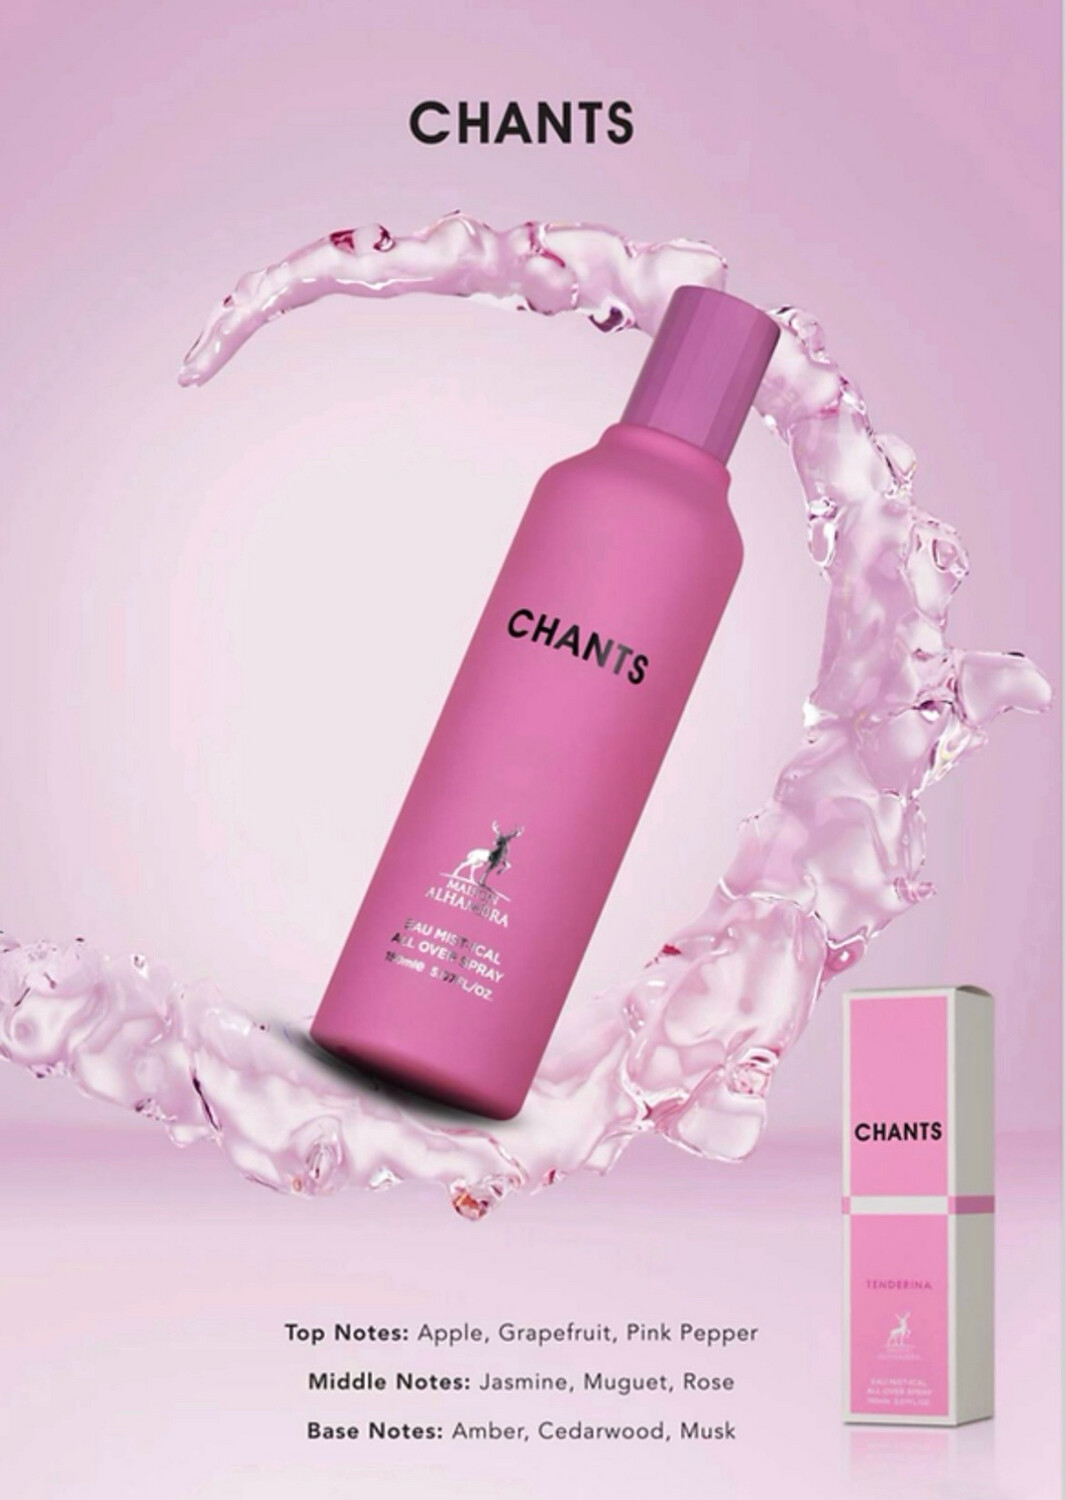 Chants - Inspired Chance Chanel